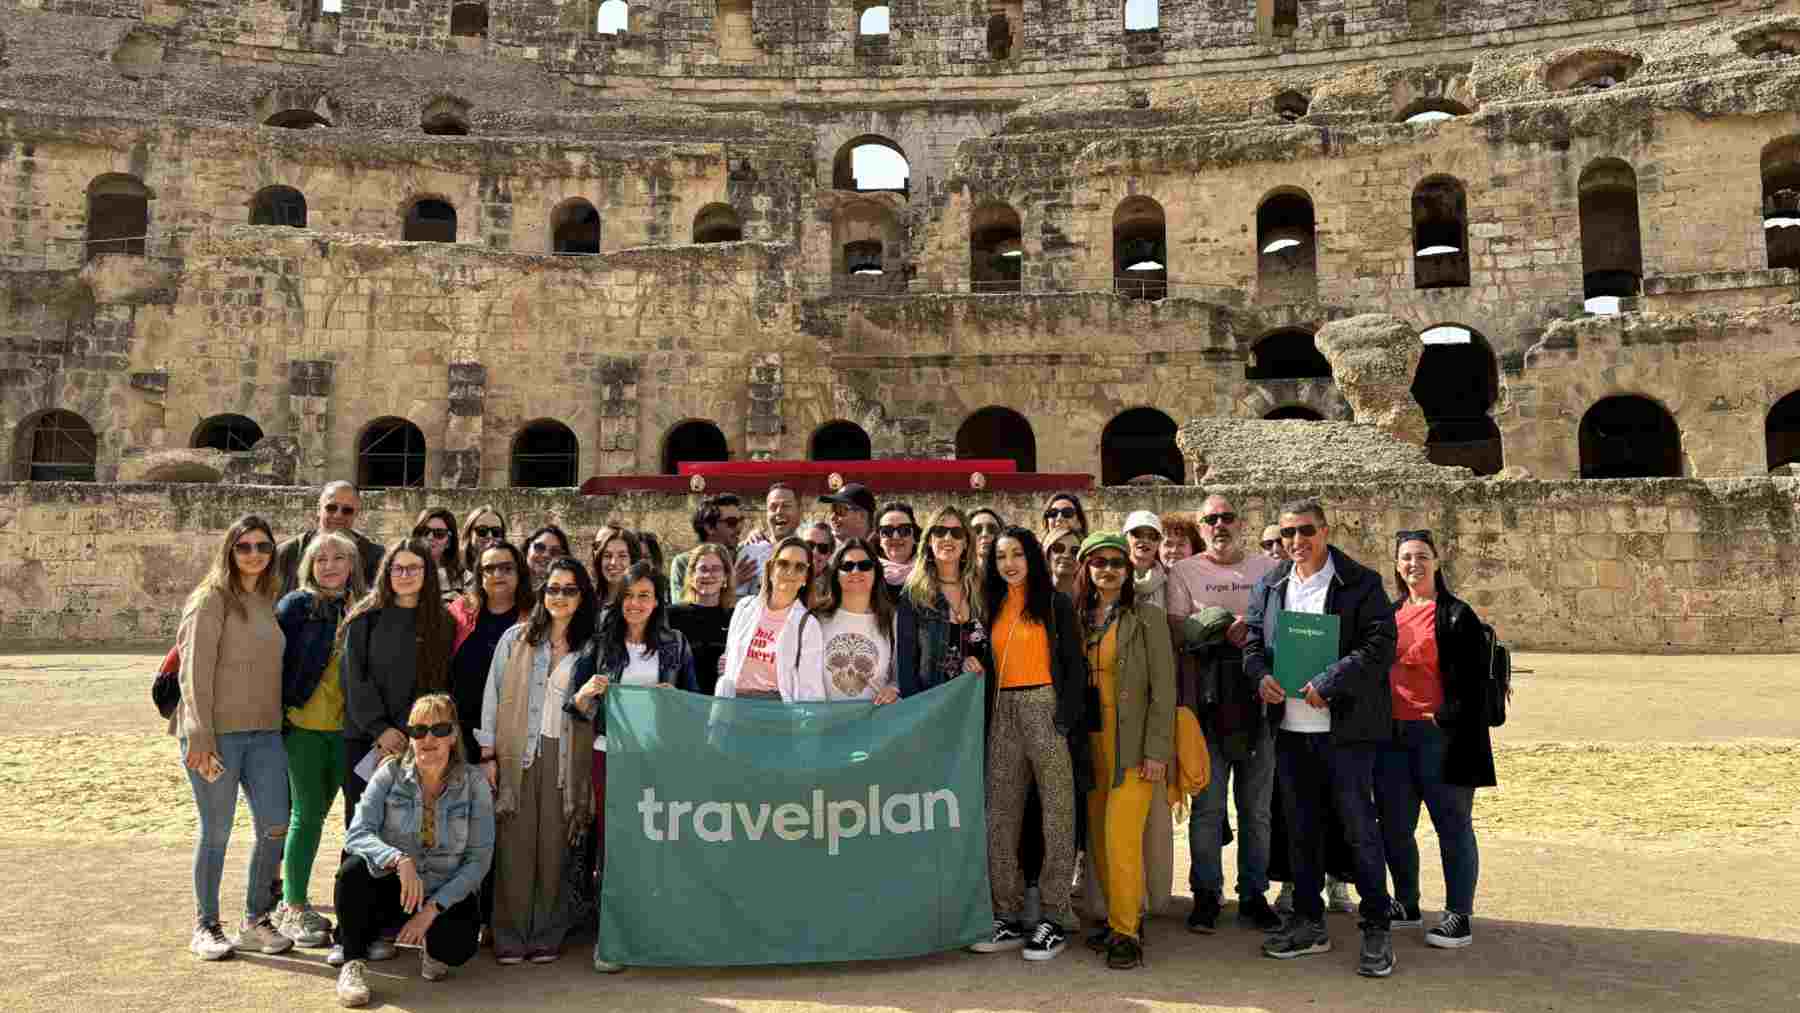 Travelplan organiza un famtrip a Túnez para descubrir la riqueza cultural y natural del destino.